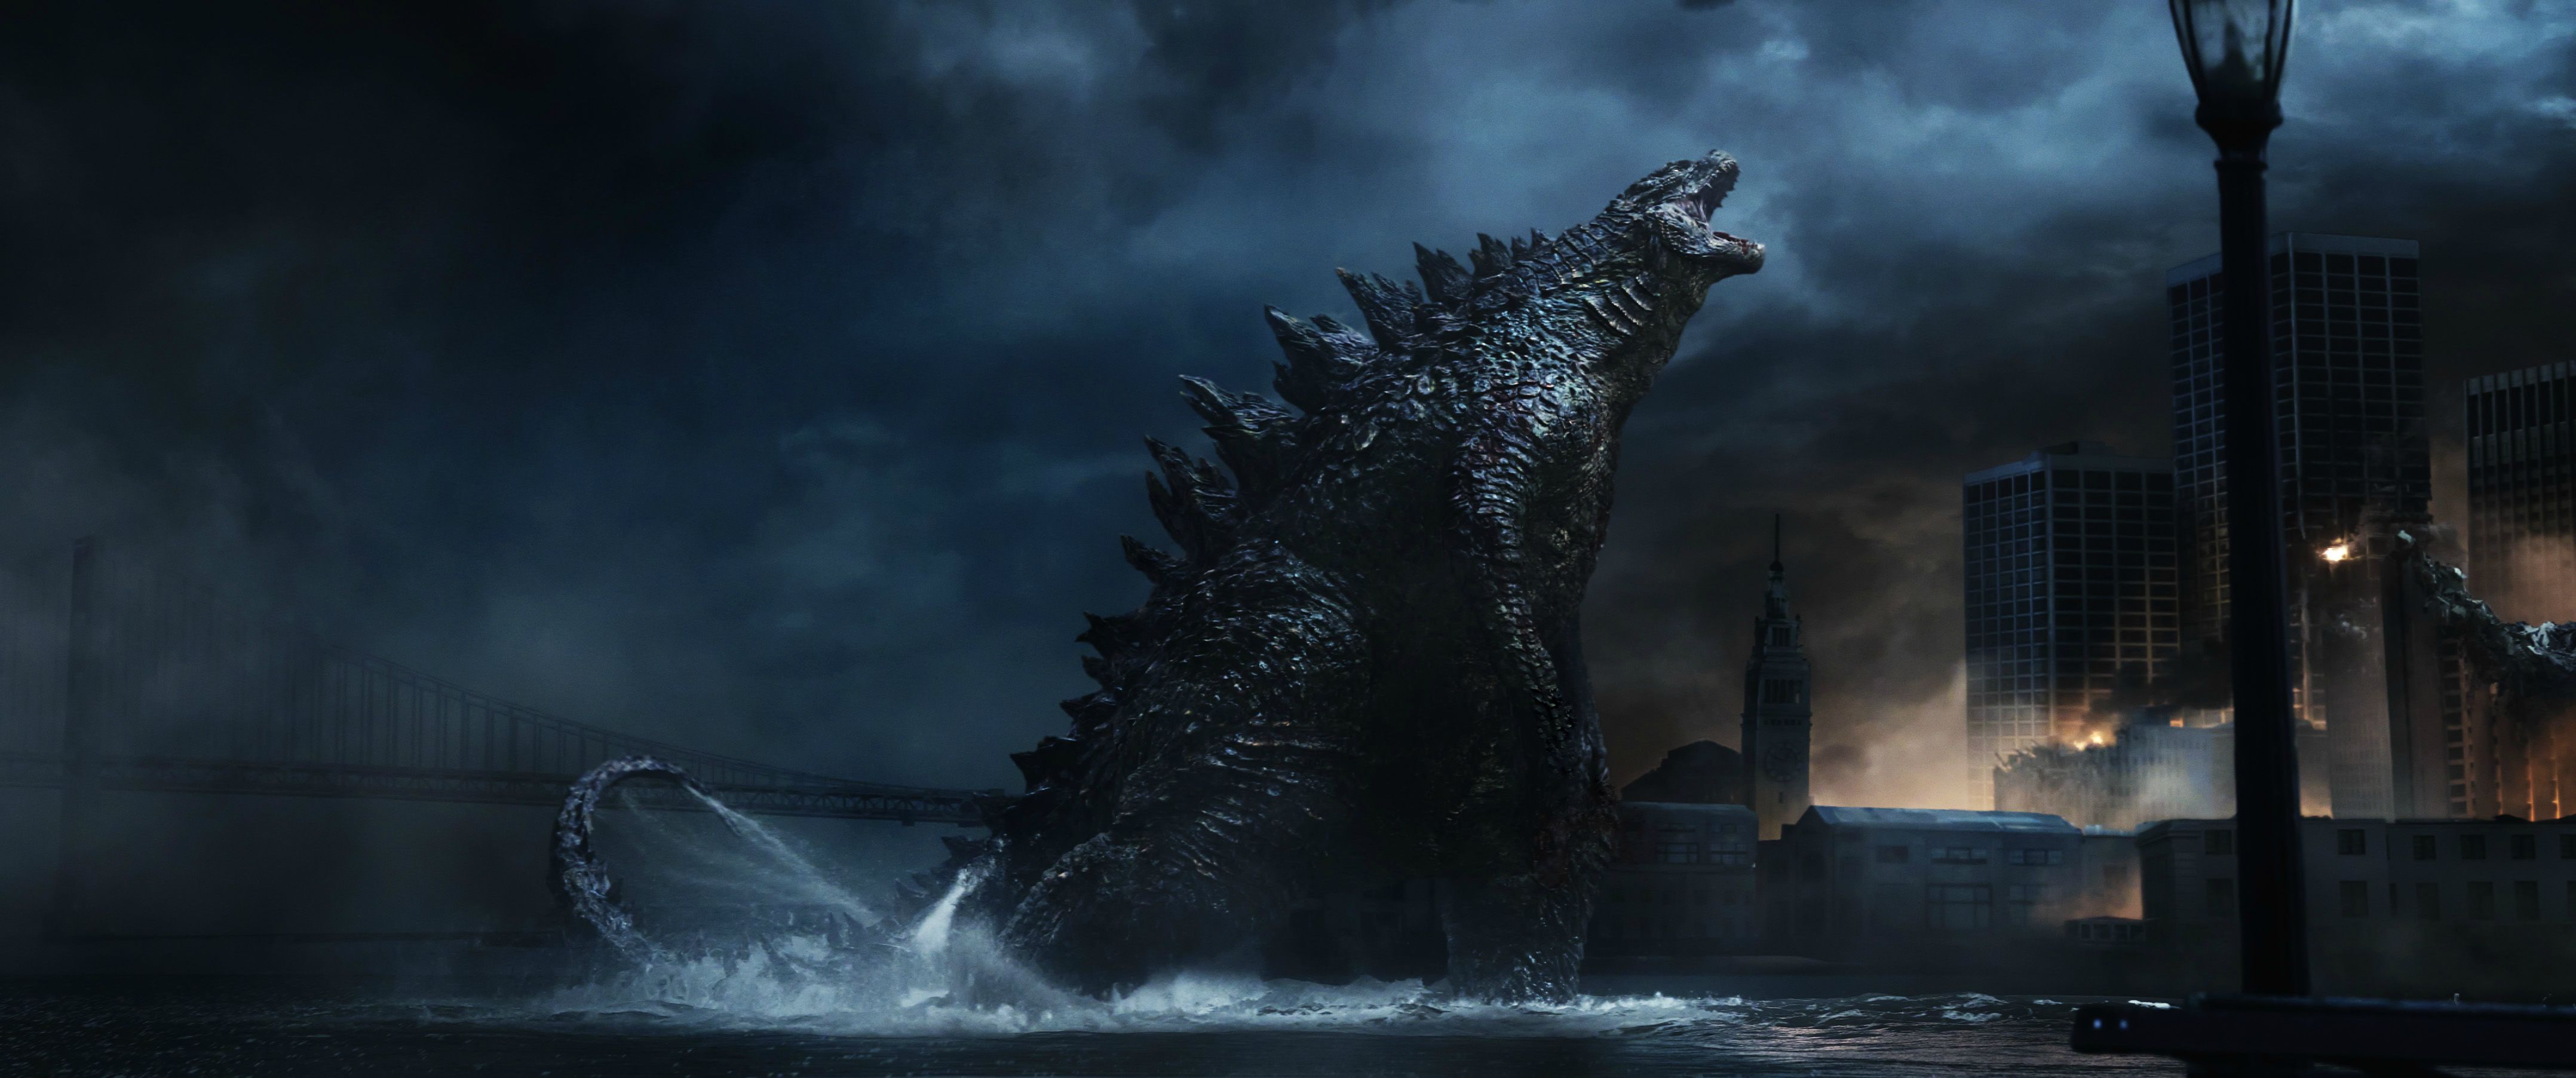 Movie Godzilla 2014 4312x1804